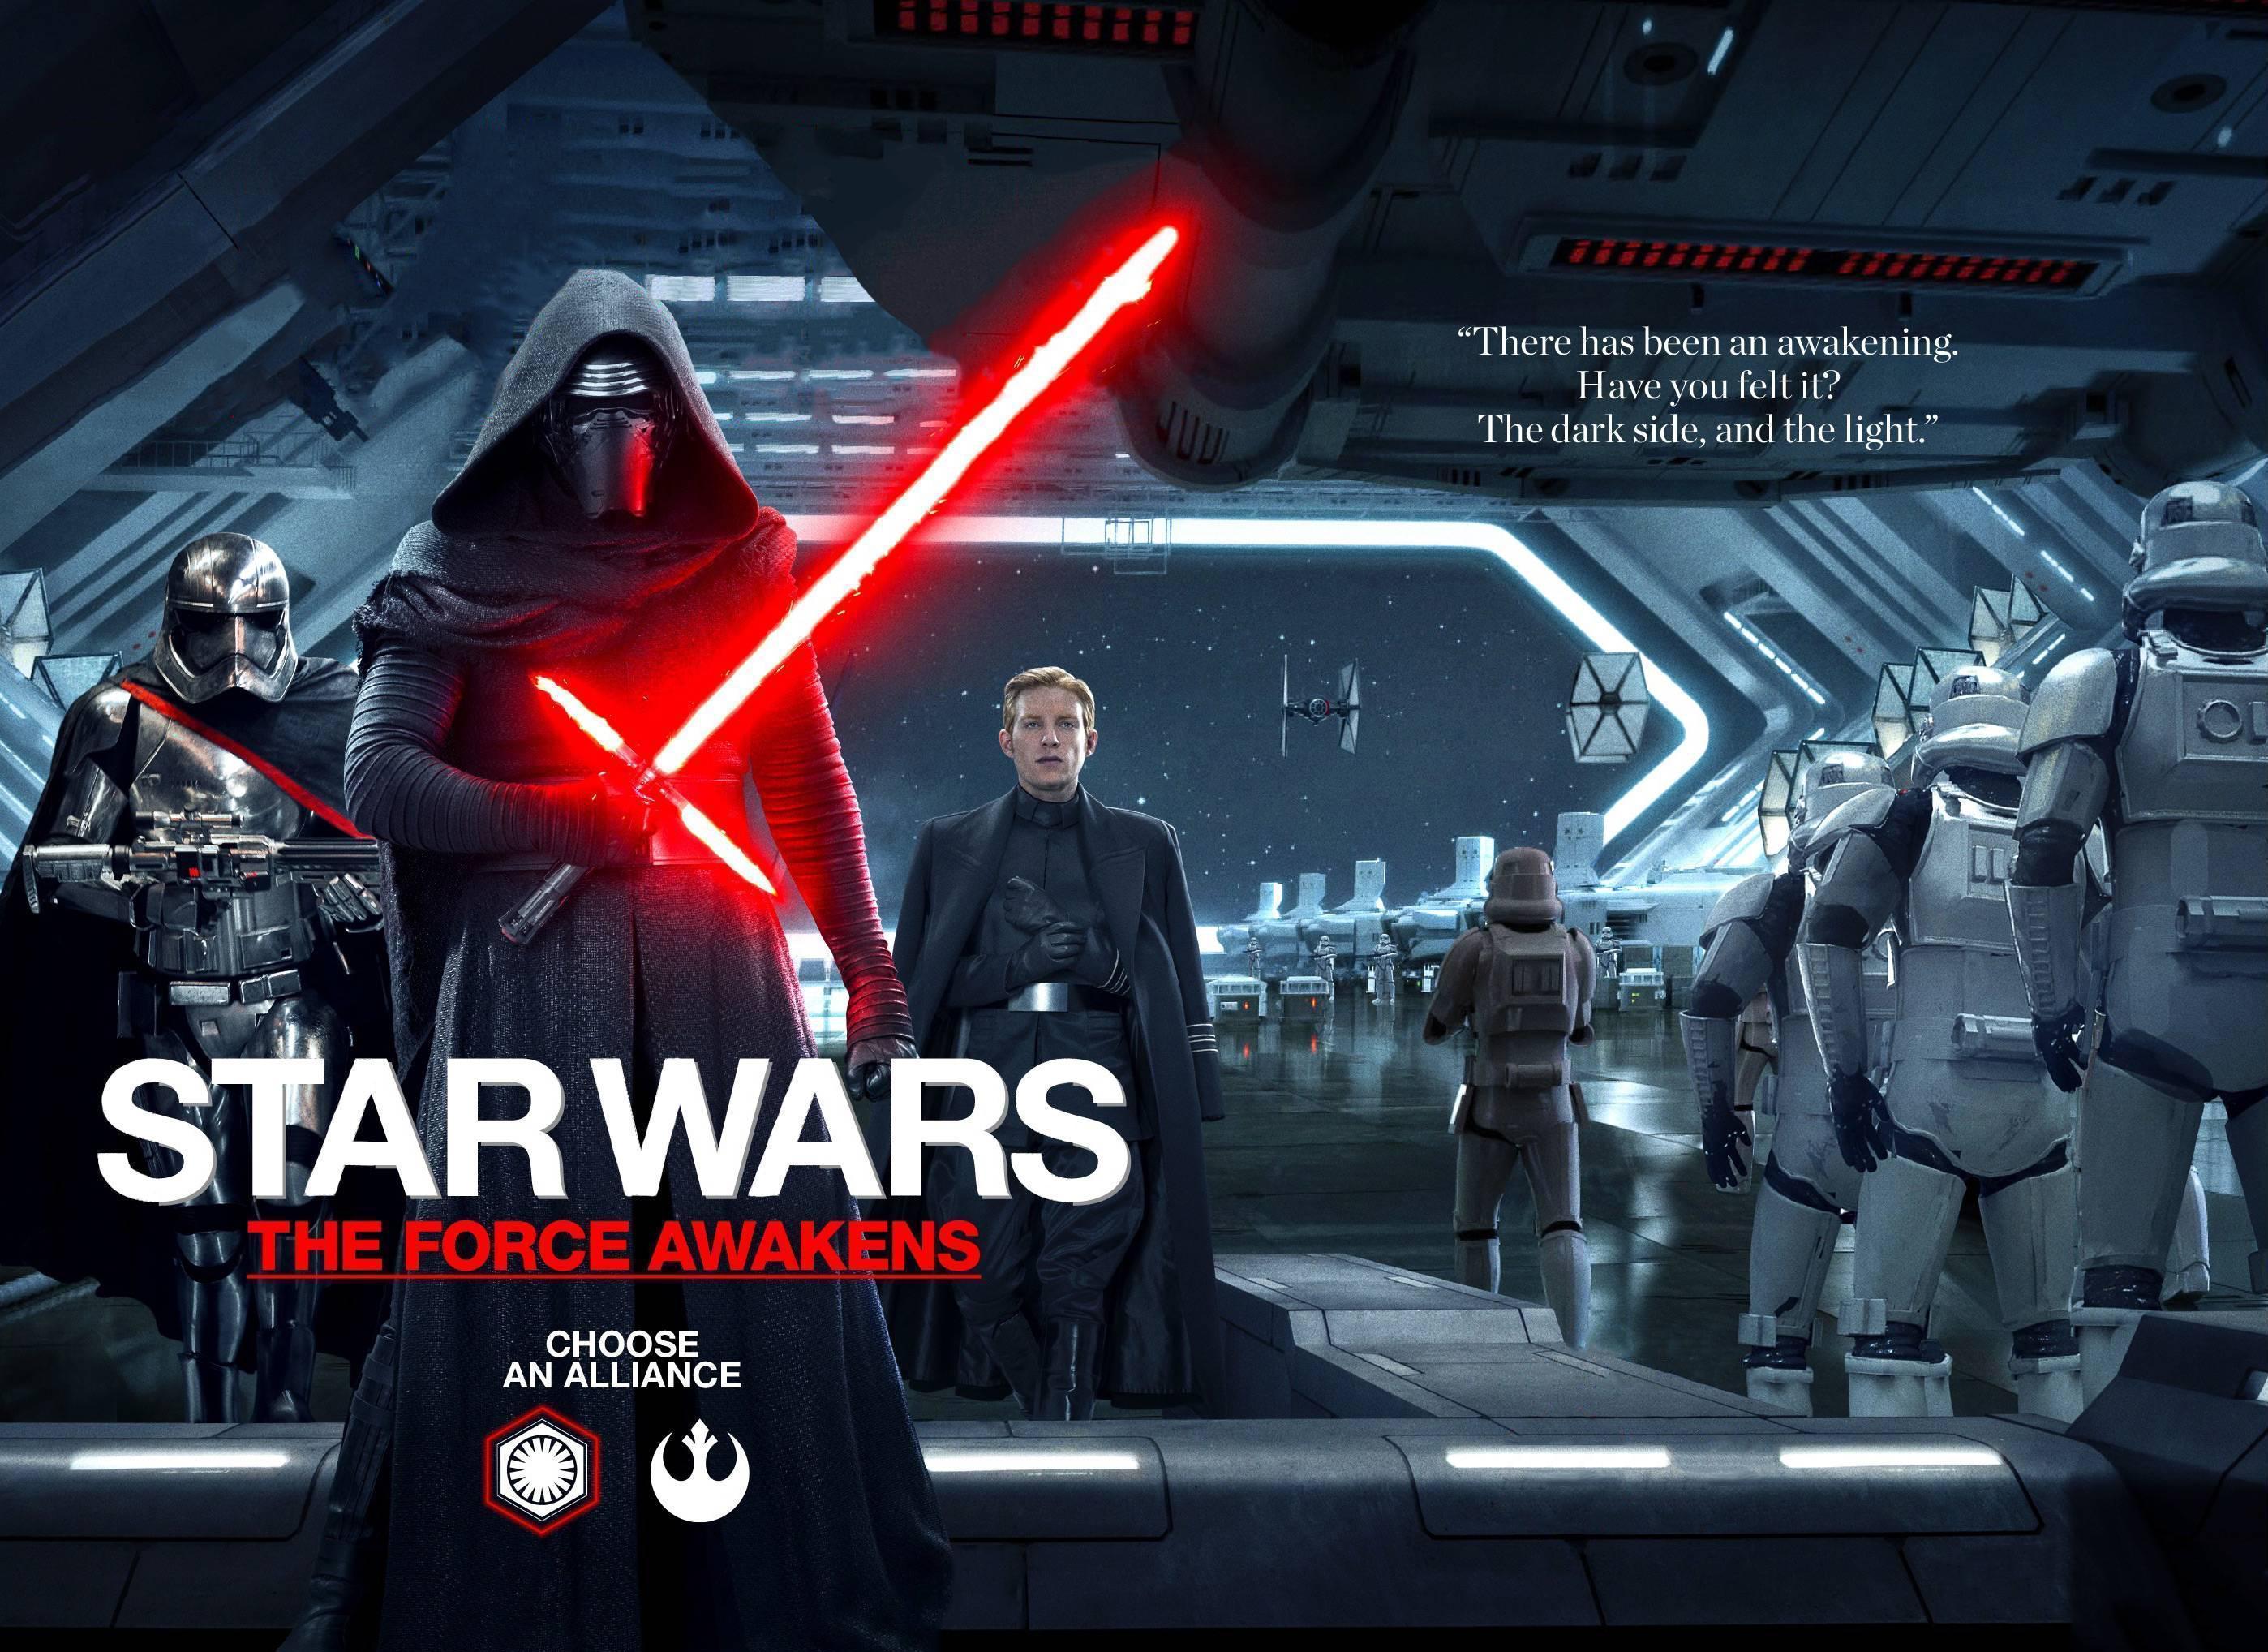 The Force Awakens Poster Wallpaper, Force Awakens Poster PC